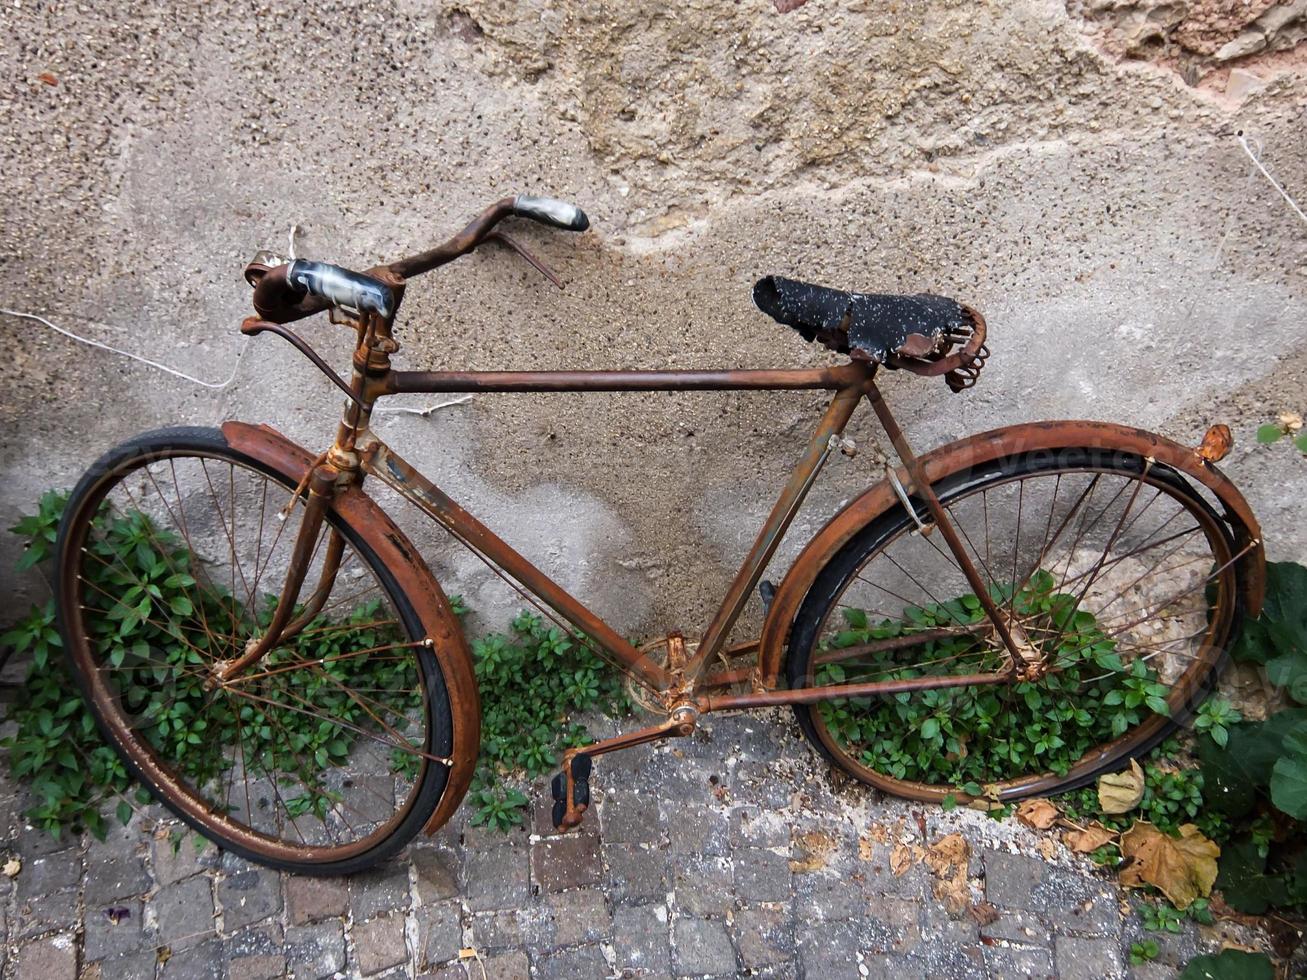 rostig alt Fahrrad durch das Mauer foto